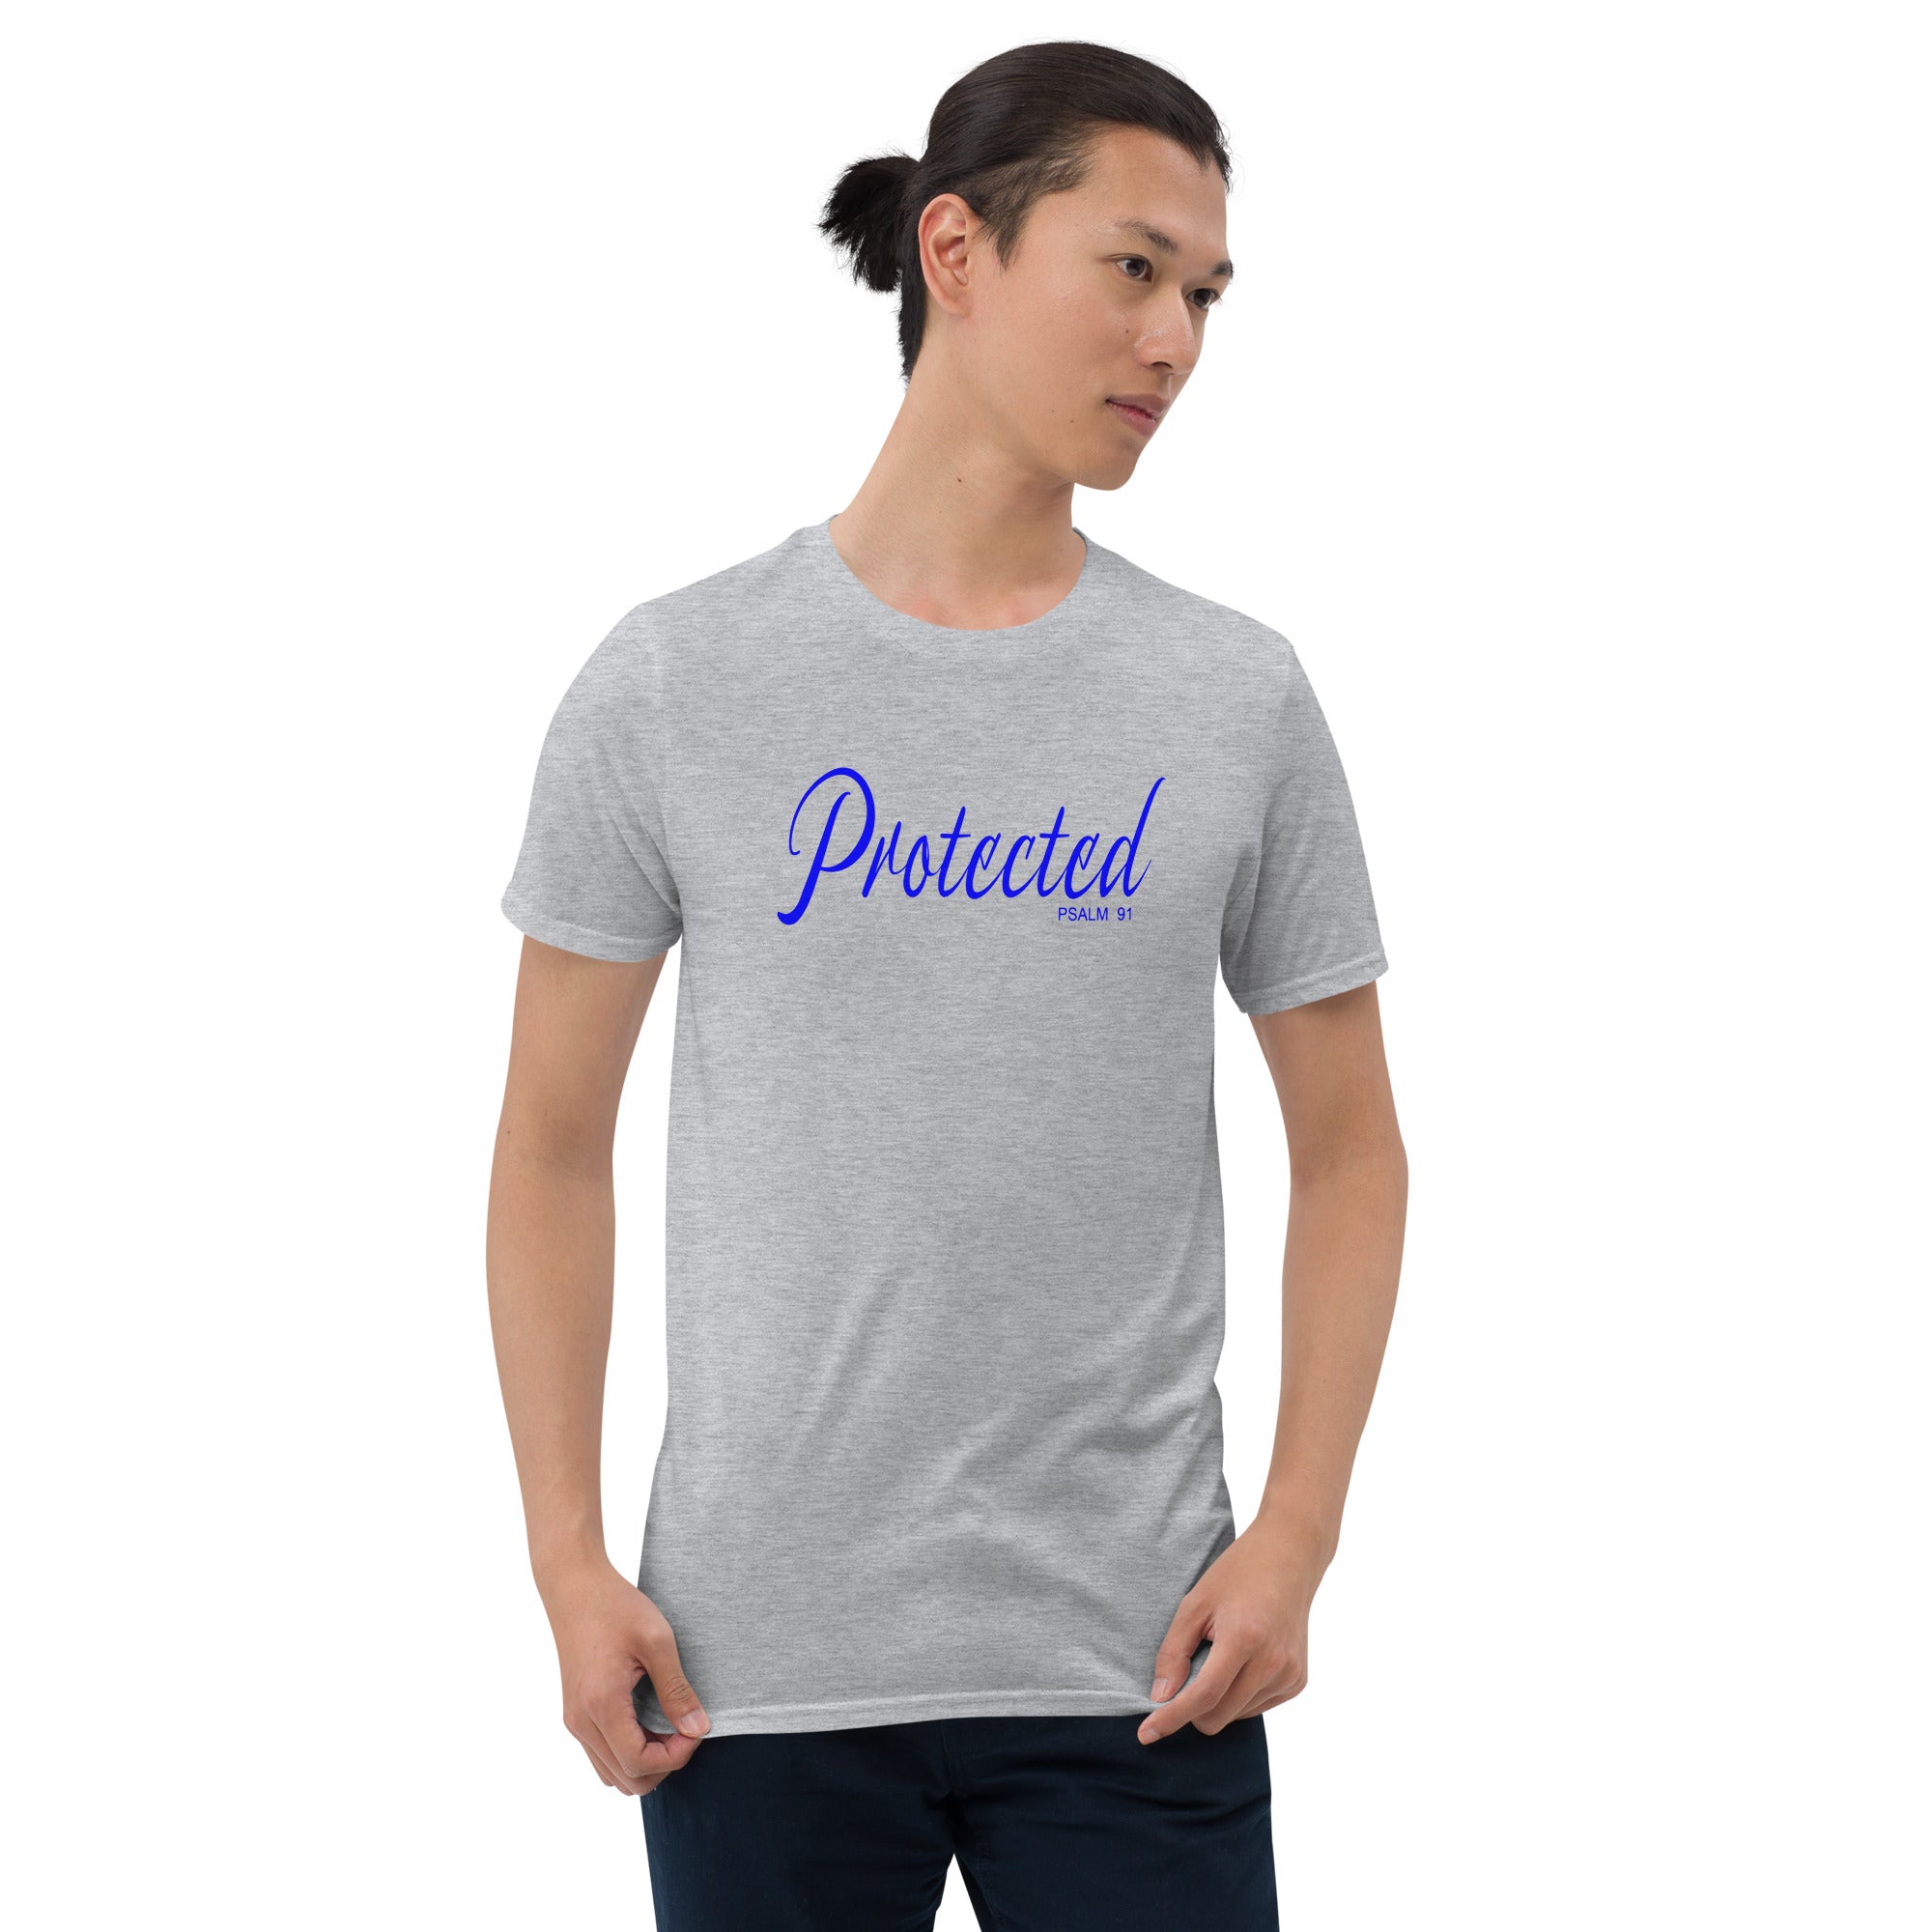 Protected - Short-Sleeve Unisex T-Shirt